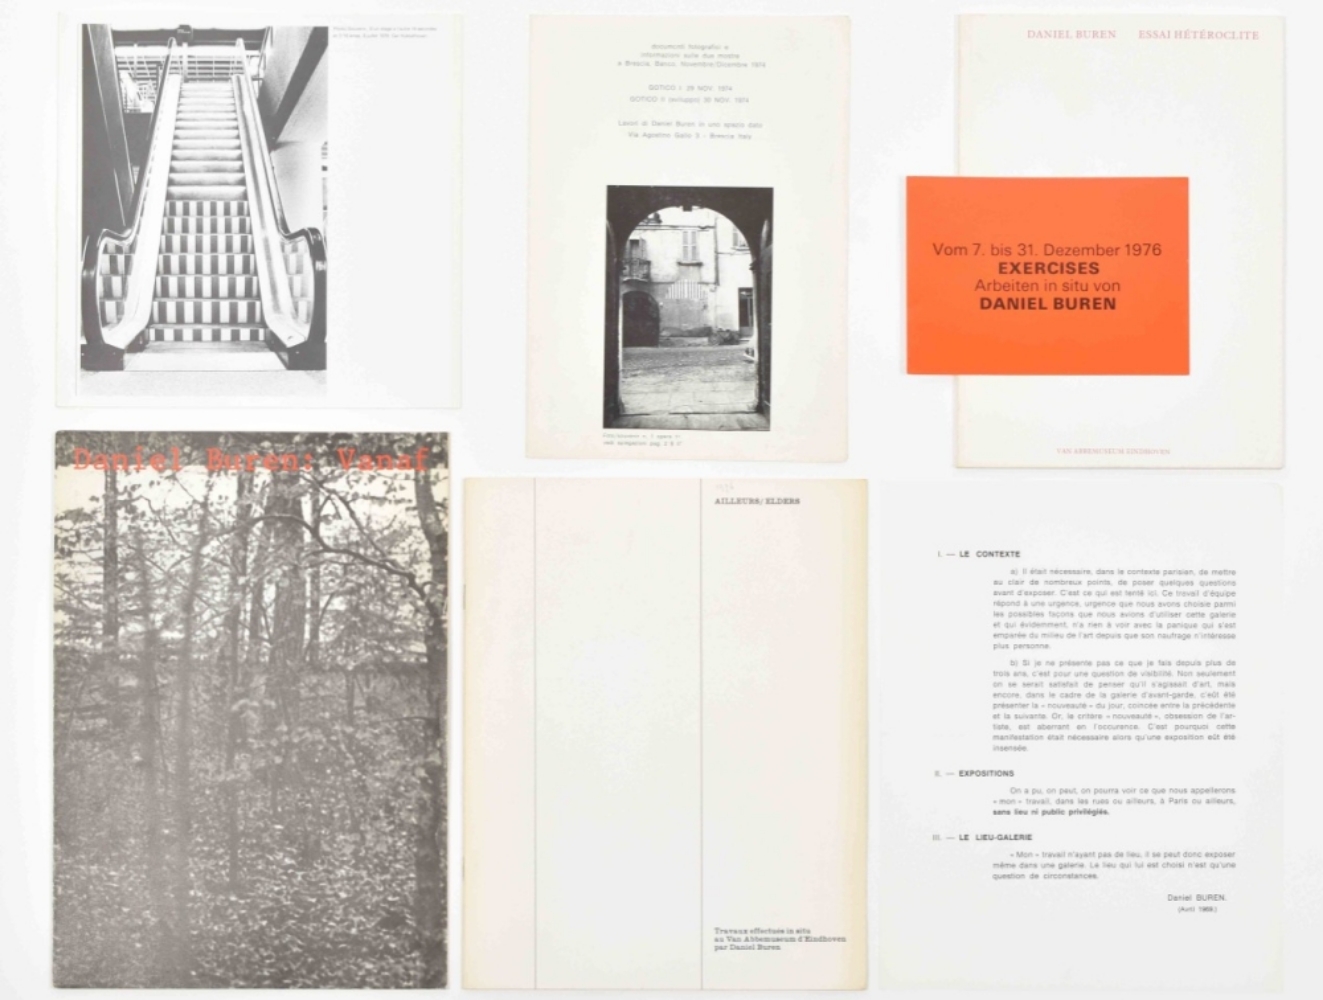 Three titles by Daniel Buren and some ephemera